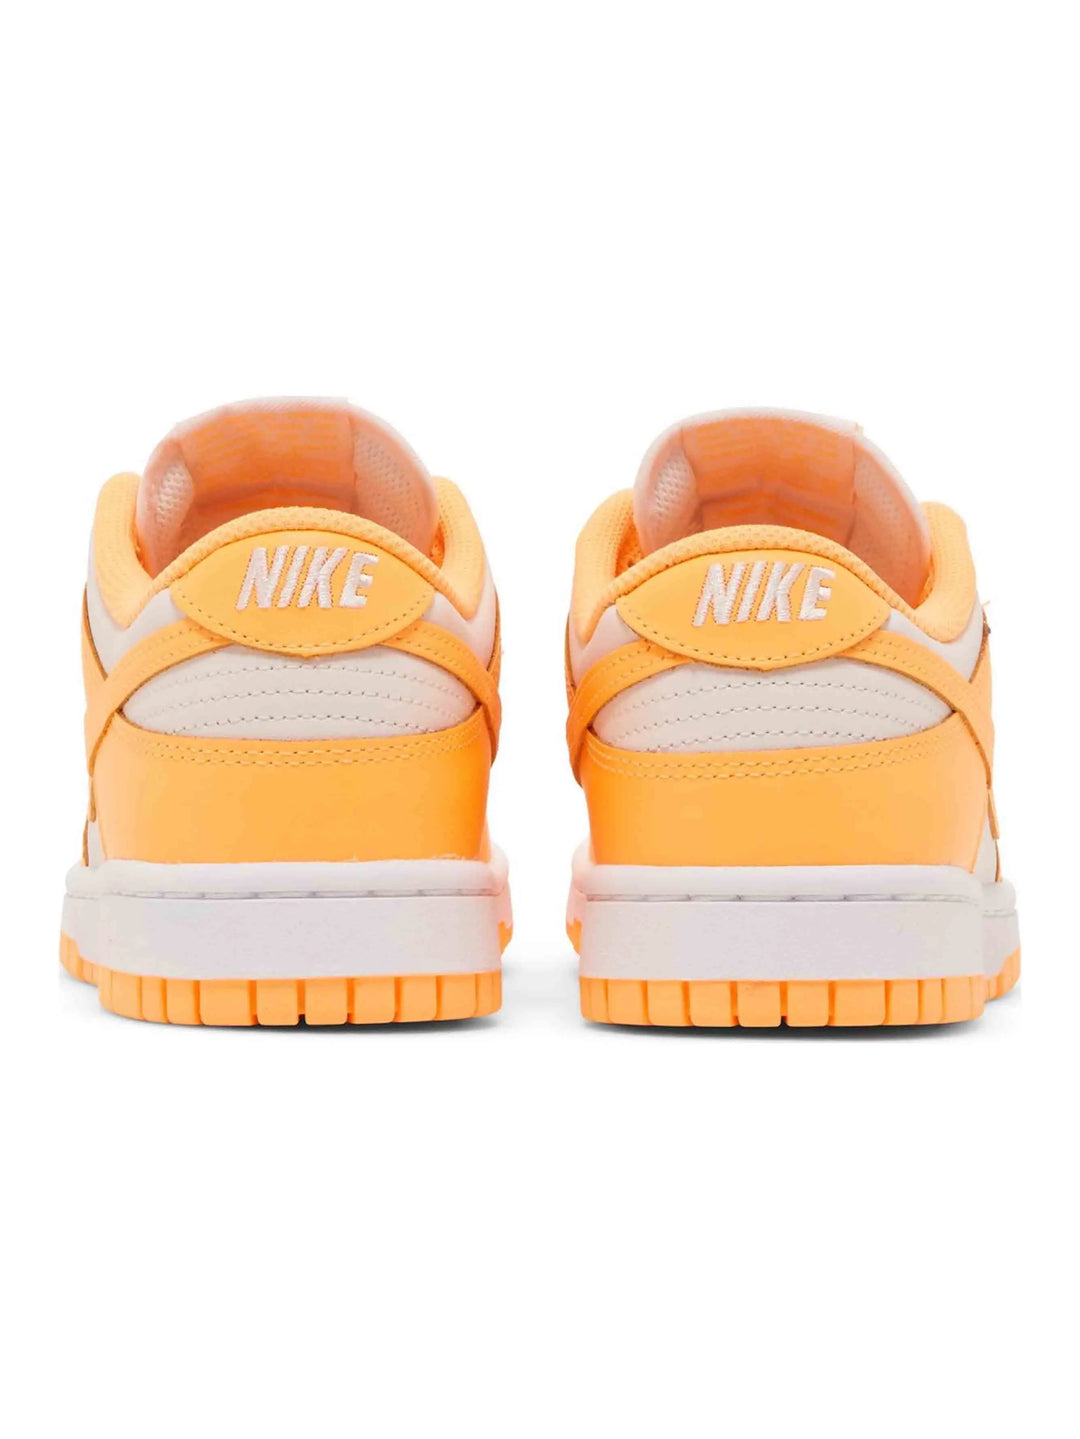 Nike Dunk Low Peach Cream [W] Prior